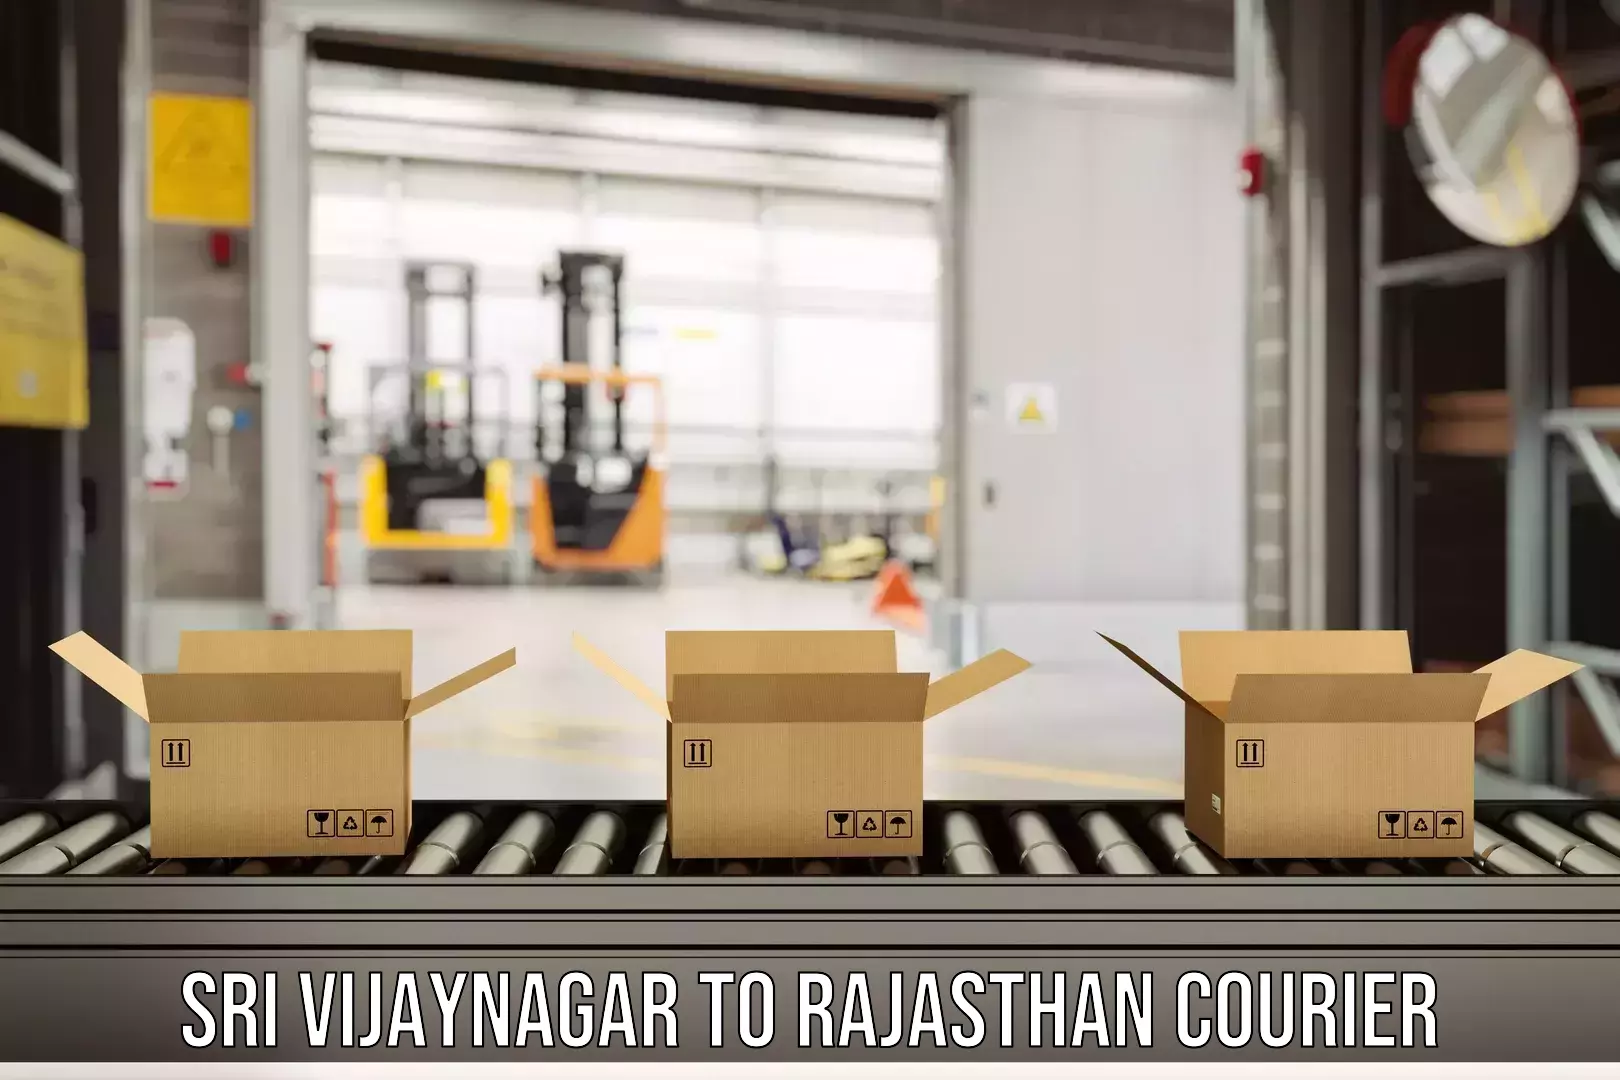 Express delivery capabilities Sri Vijaynagar to Rajasthan